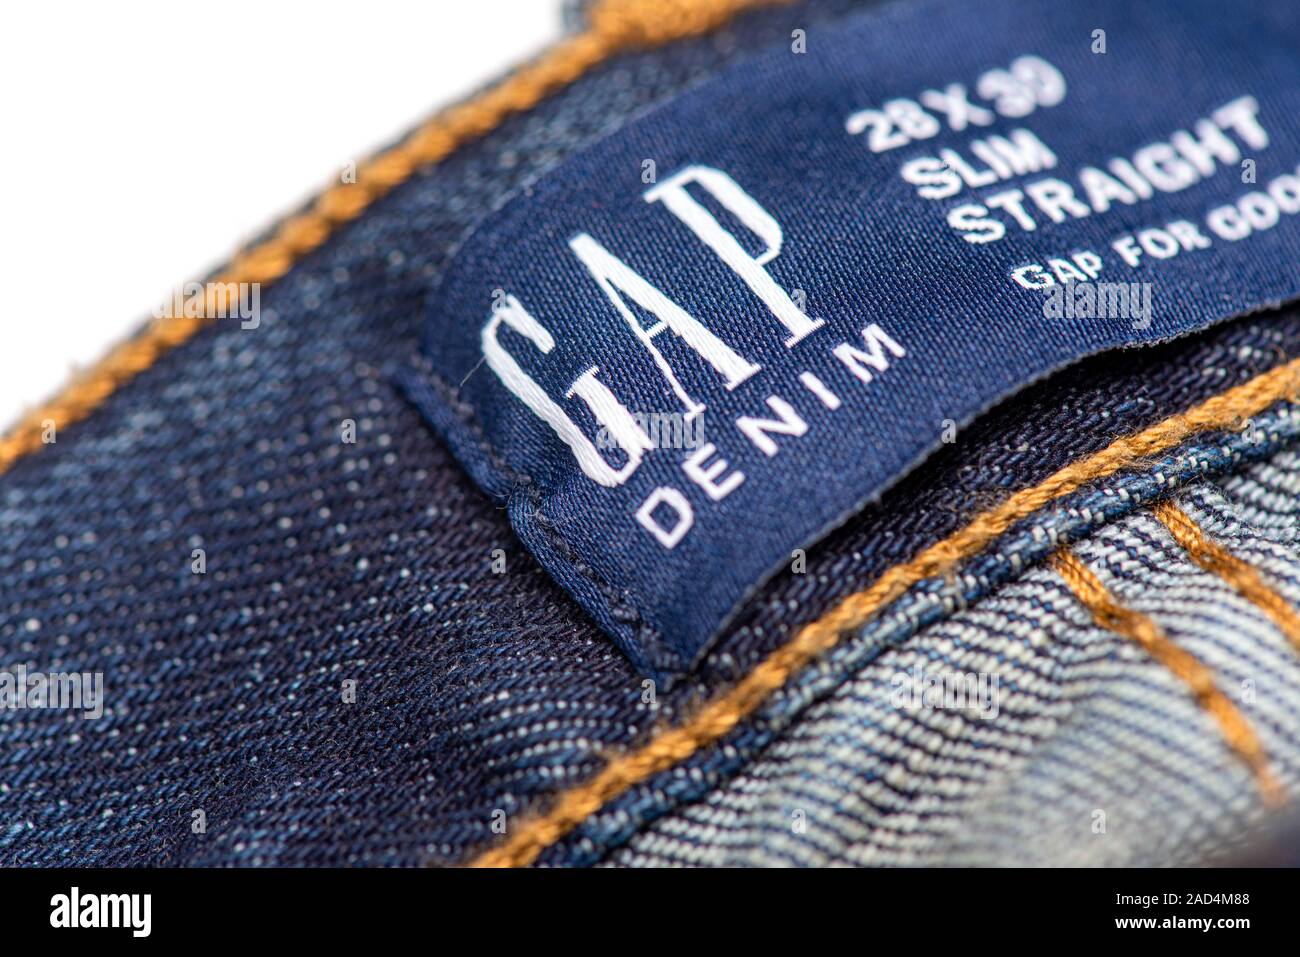 https://c8.alamy.com/comp/2AD4M88/berlin-nov-29-gap-label-on-denim-jeans-at-gap-store-in-berlin-on-november-29-2019-in-germany-2AD4M88.jpg